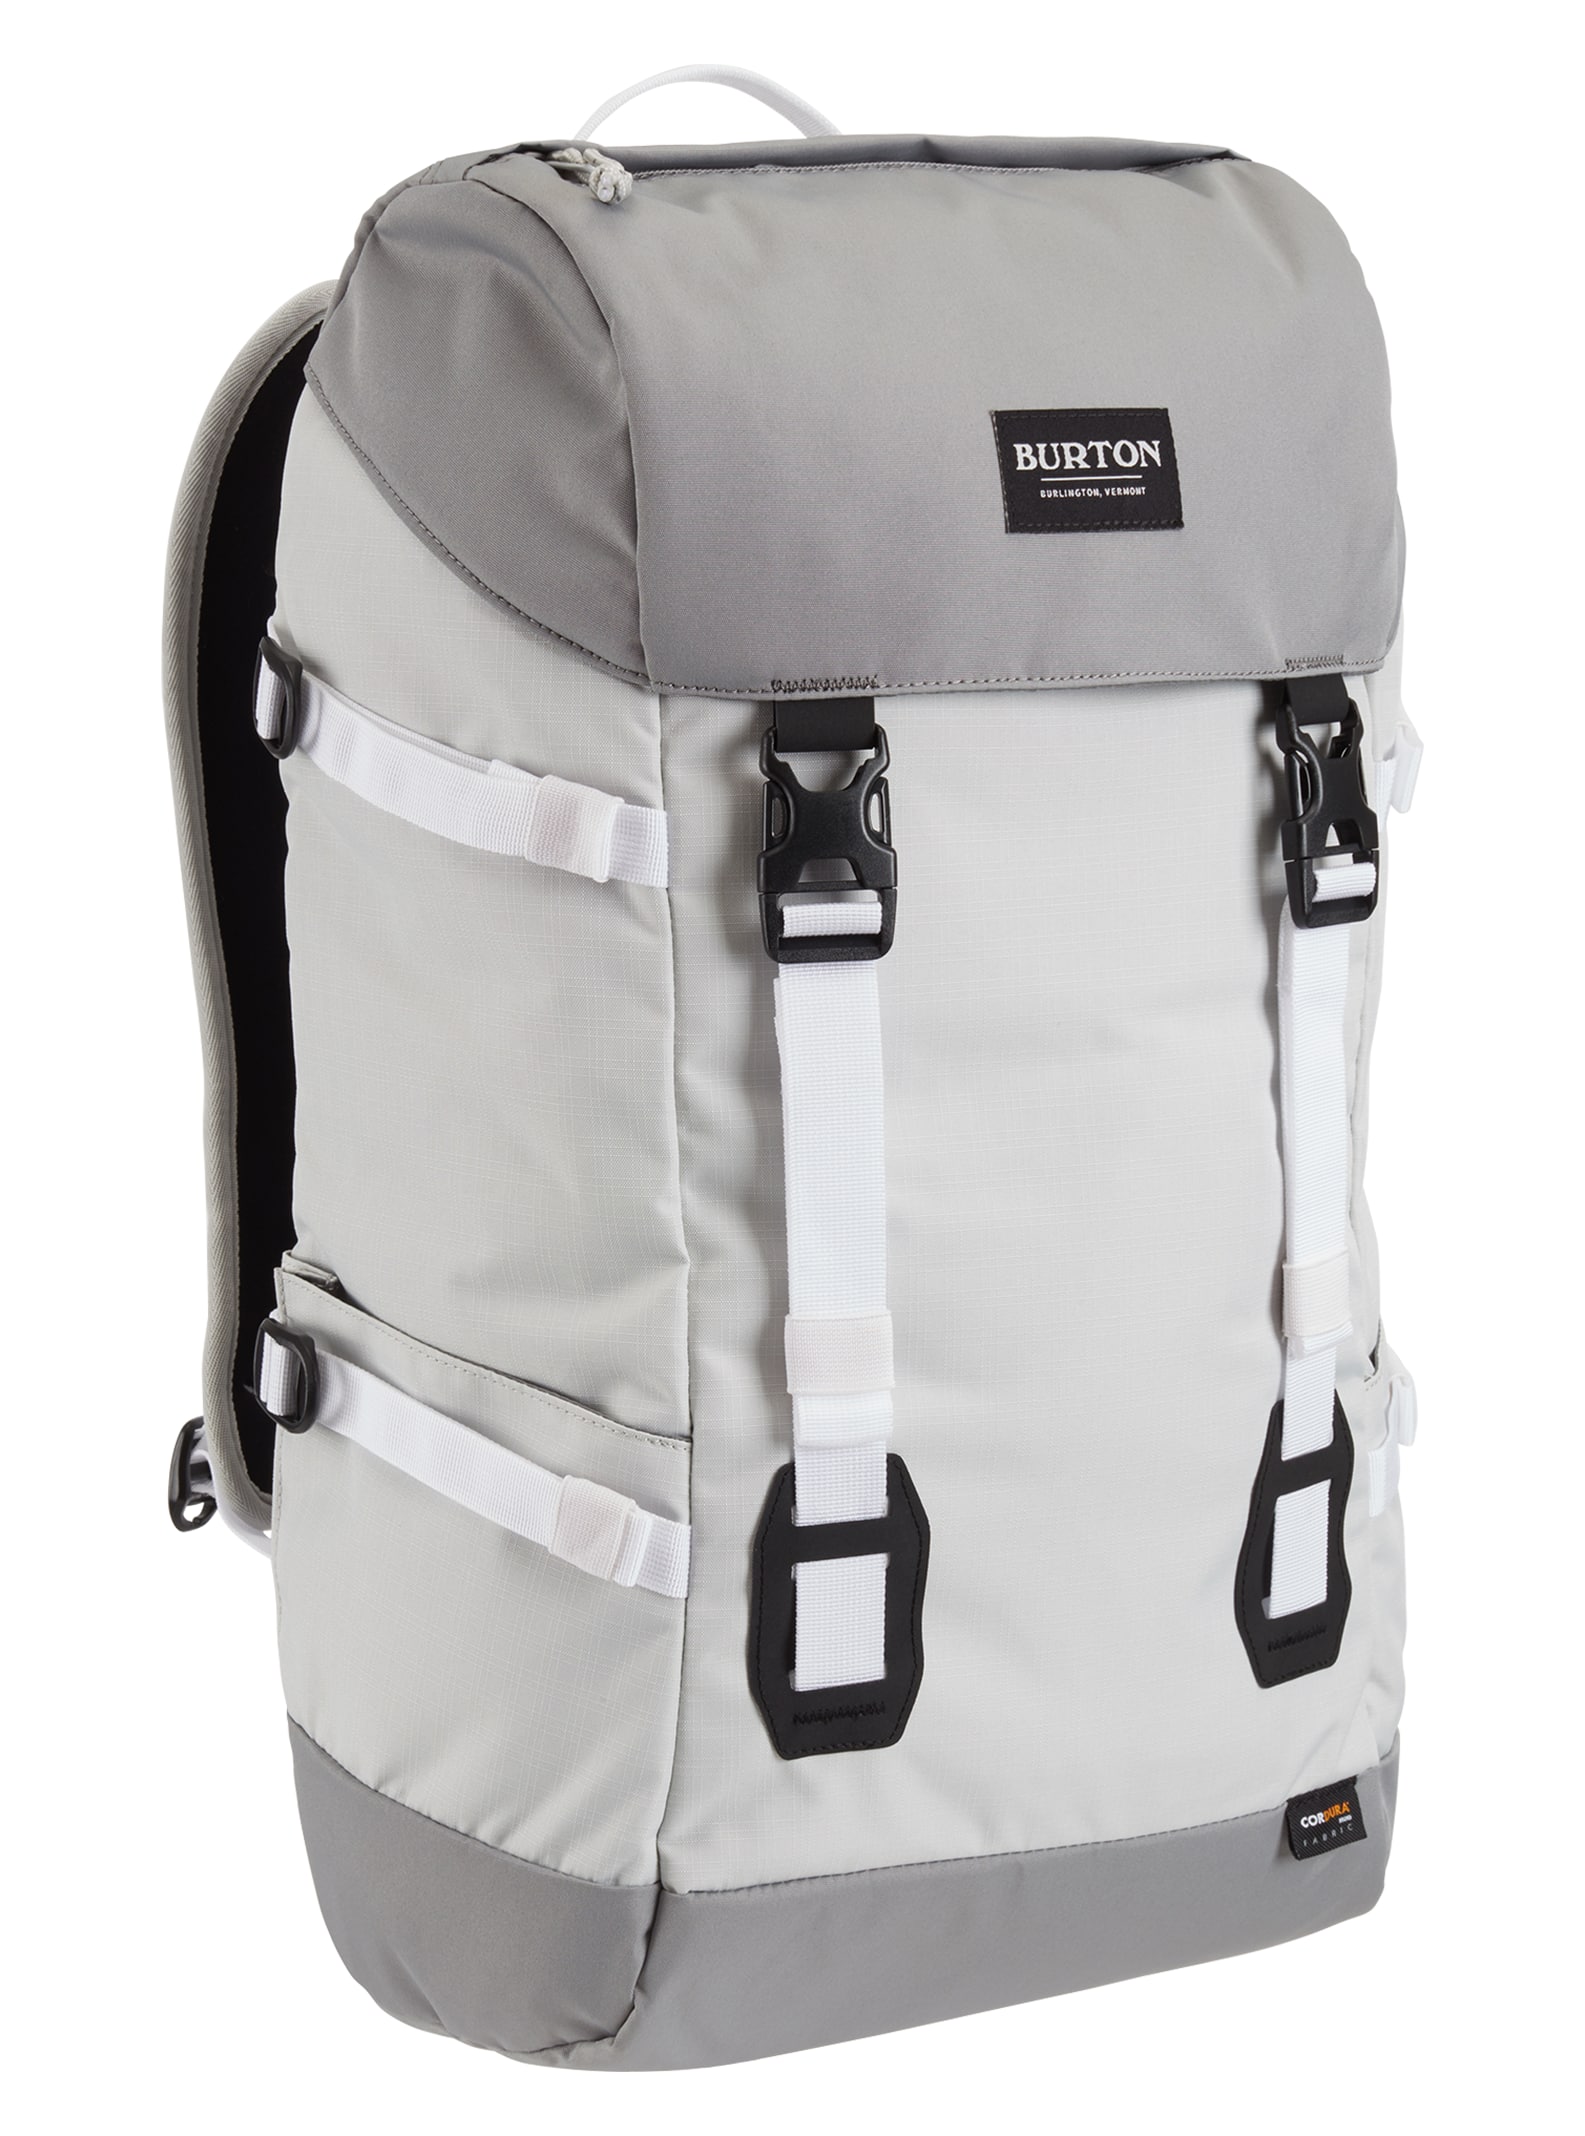 Burton Tinder 2.0 30L Backpack | Burton.com Spring 2021 US